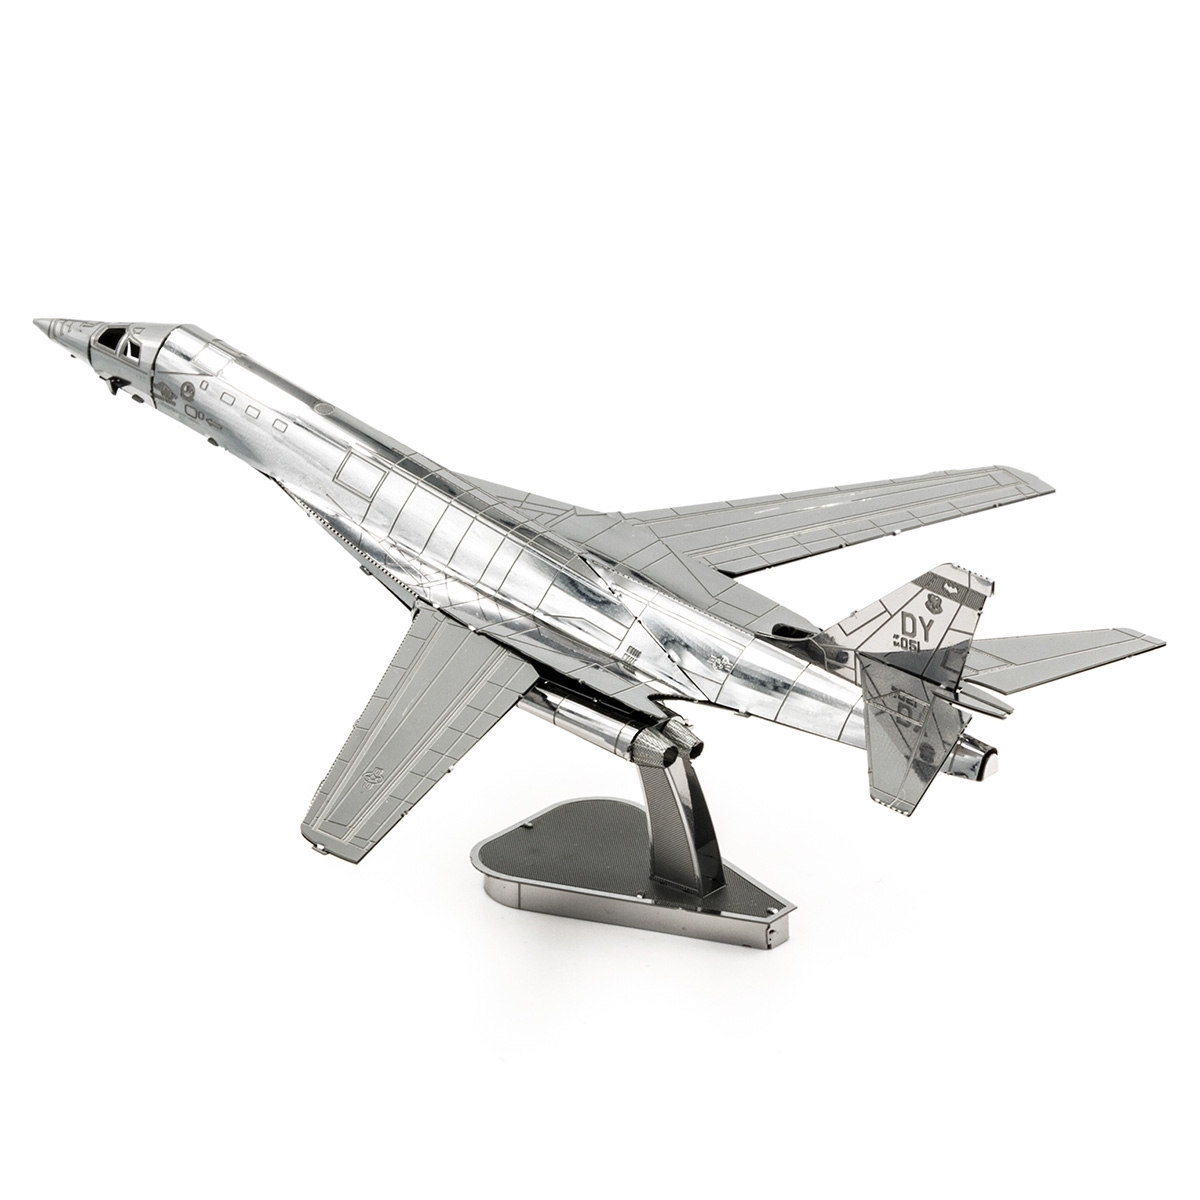 SET of 2 Fascinations Metal Earth USAF F-117 & B-1B Lancer Aircraft 3D Model Kit 